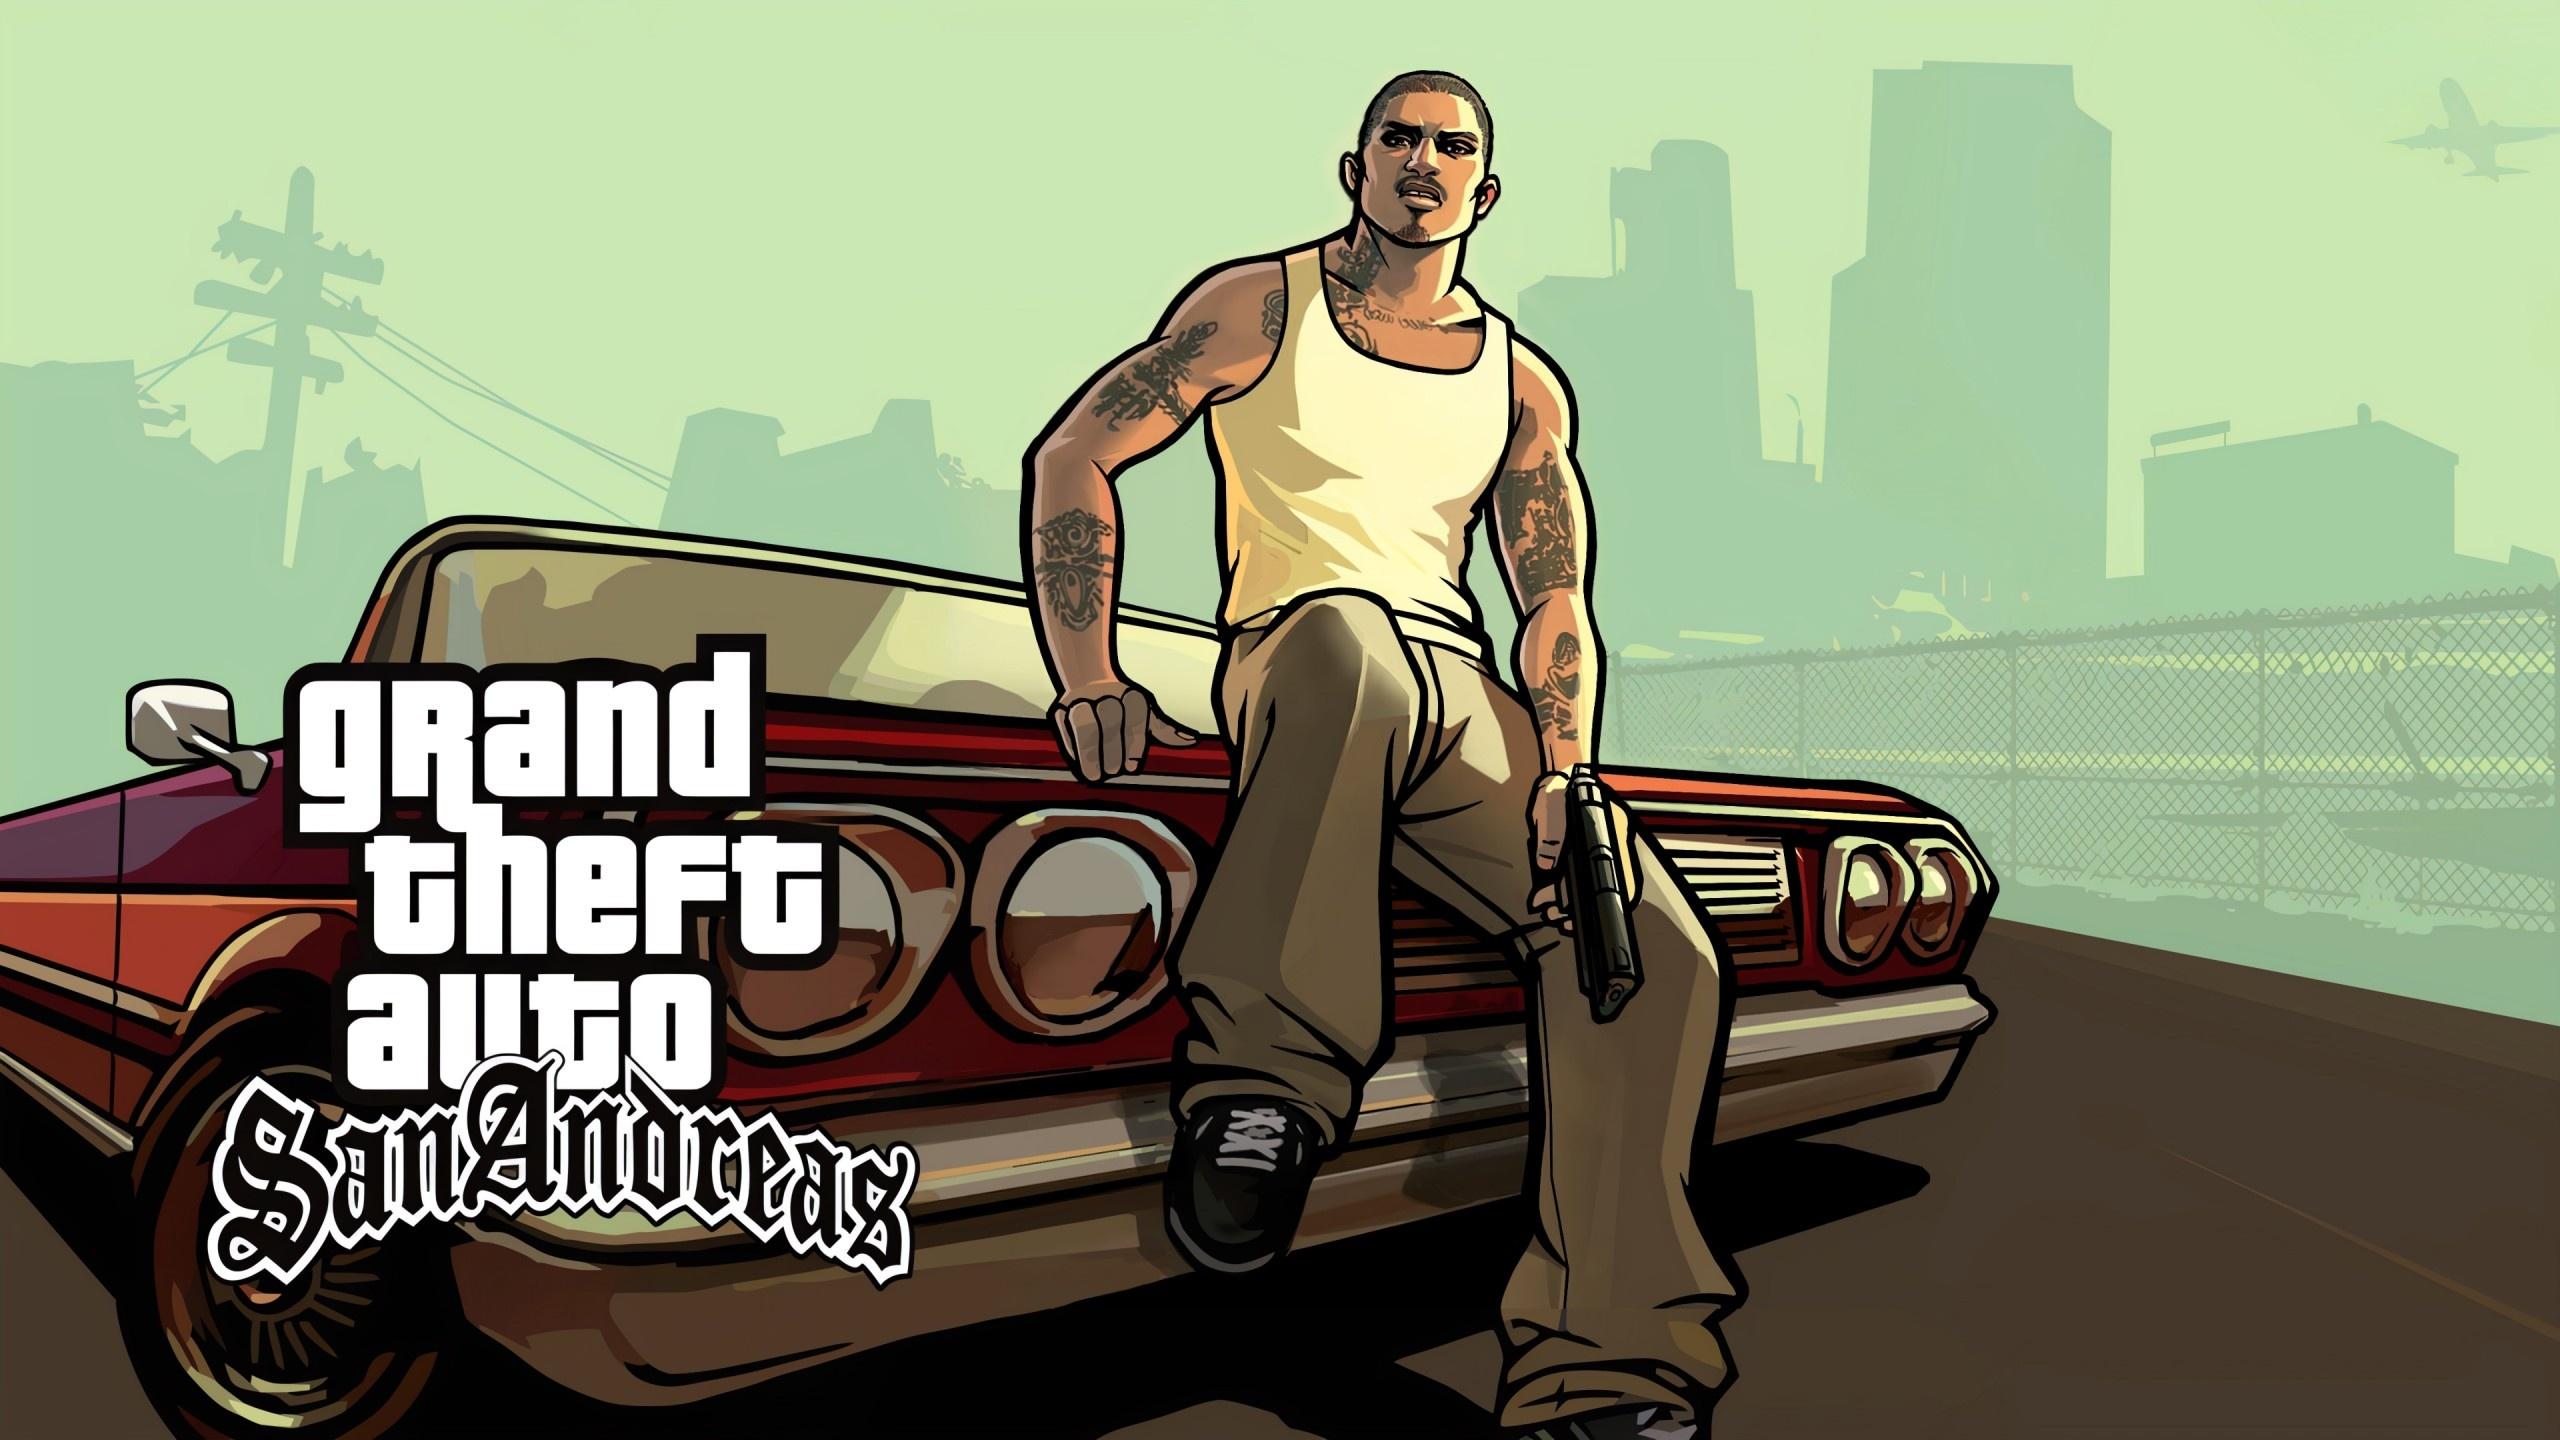 Gta loading theme. Grand Theft auto: San Andreas. Grand Theft auto San Andreas ГТА 5. ГТА Сан андреас загрузочные экраны. Картинки ГТА Сан андреас.